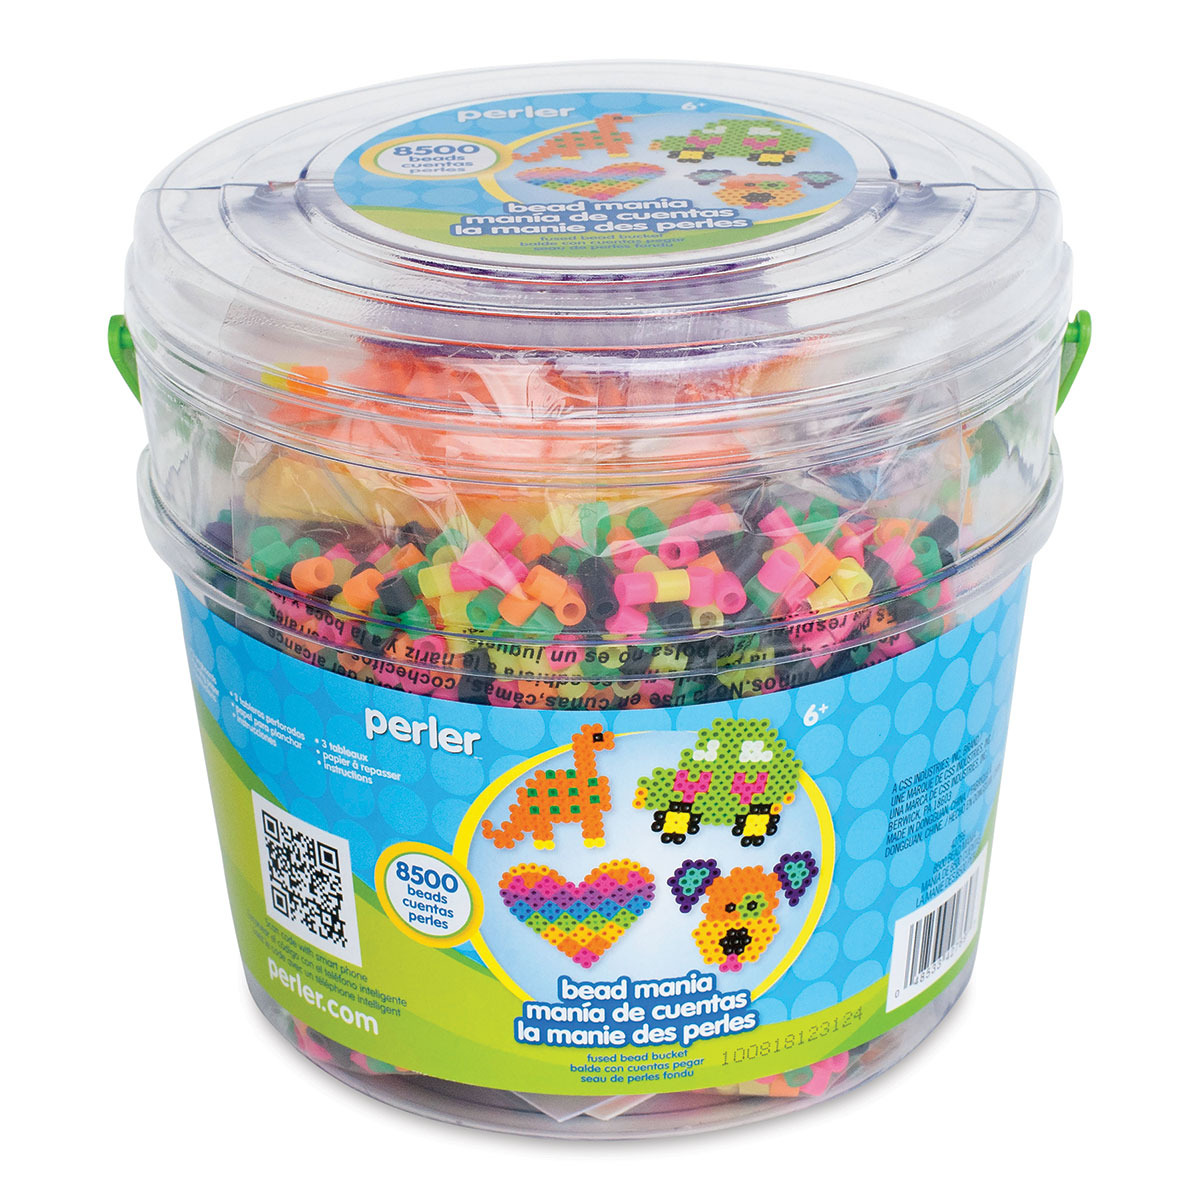 Perler 80-42977 Care Bears Beads Small Bucket Kit, 5000pcs